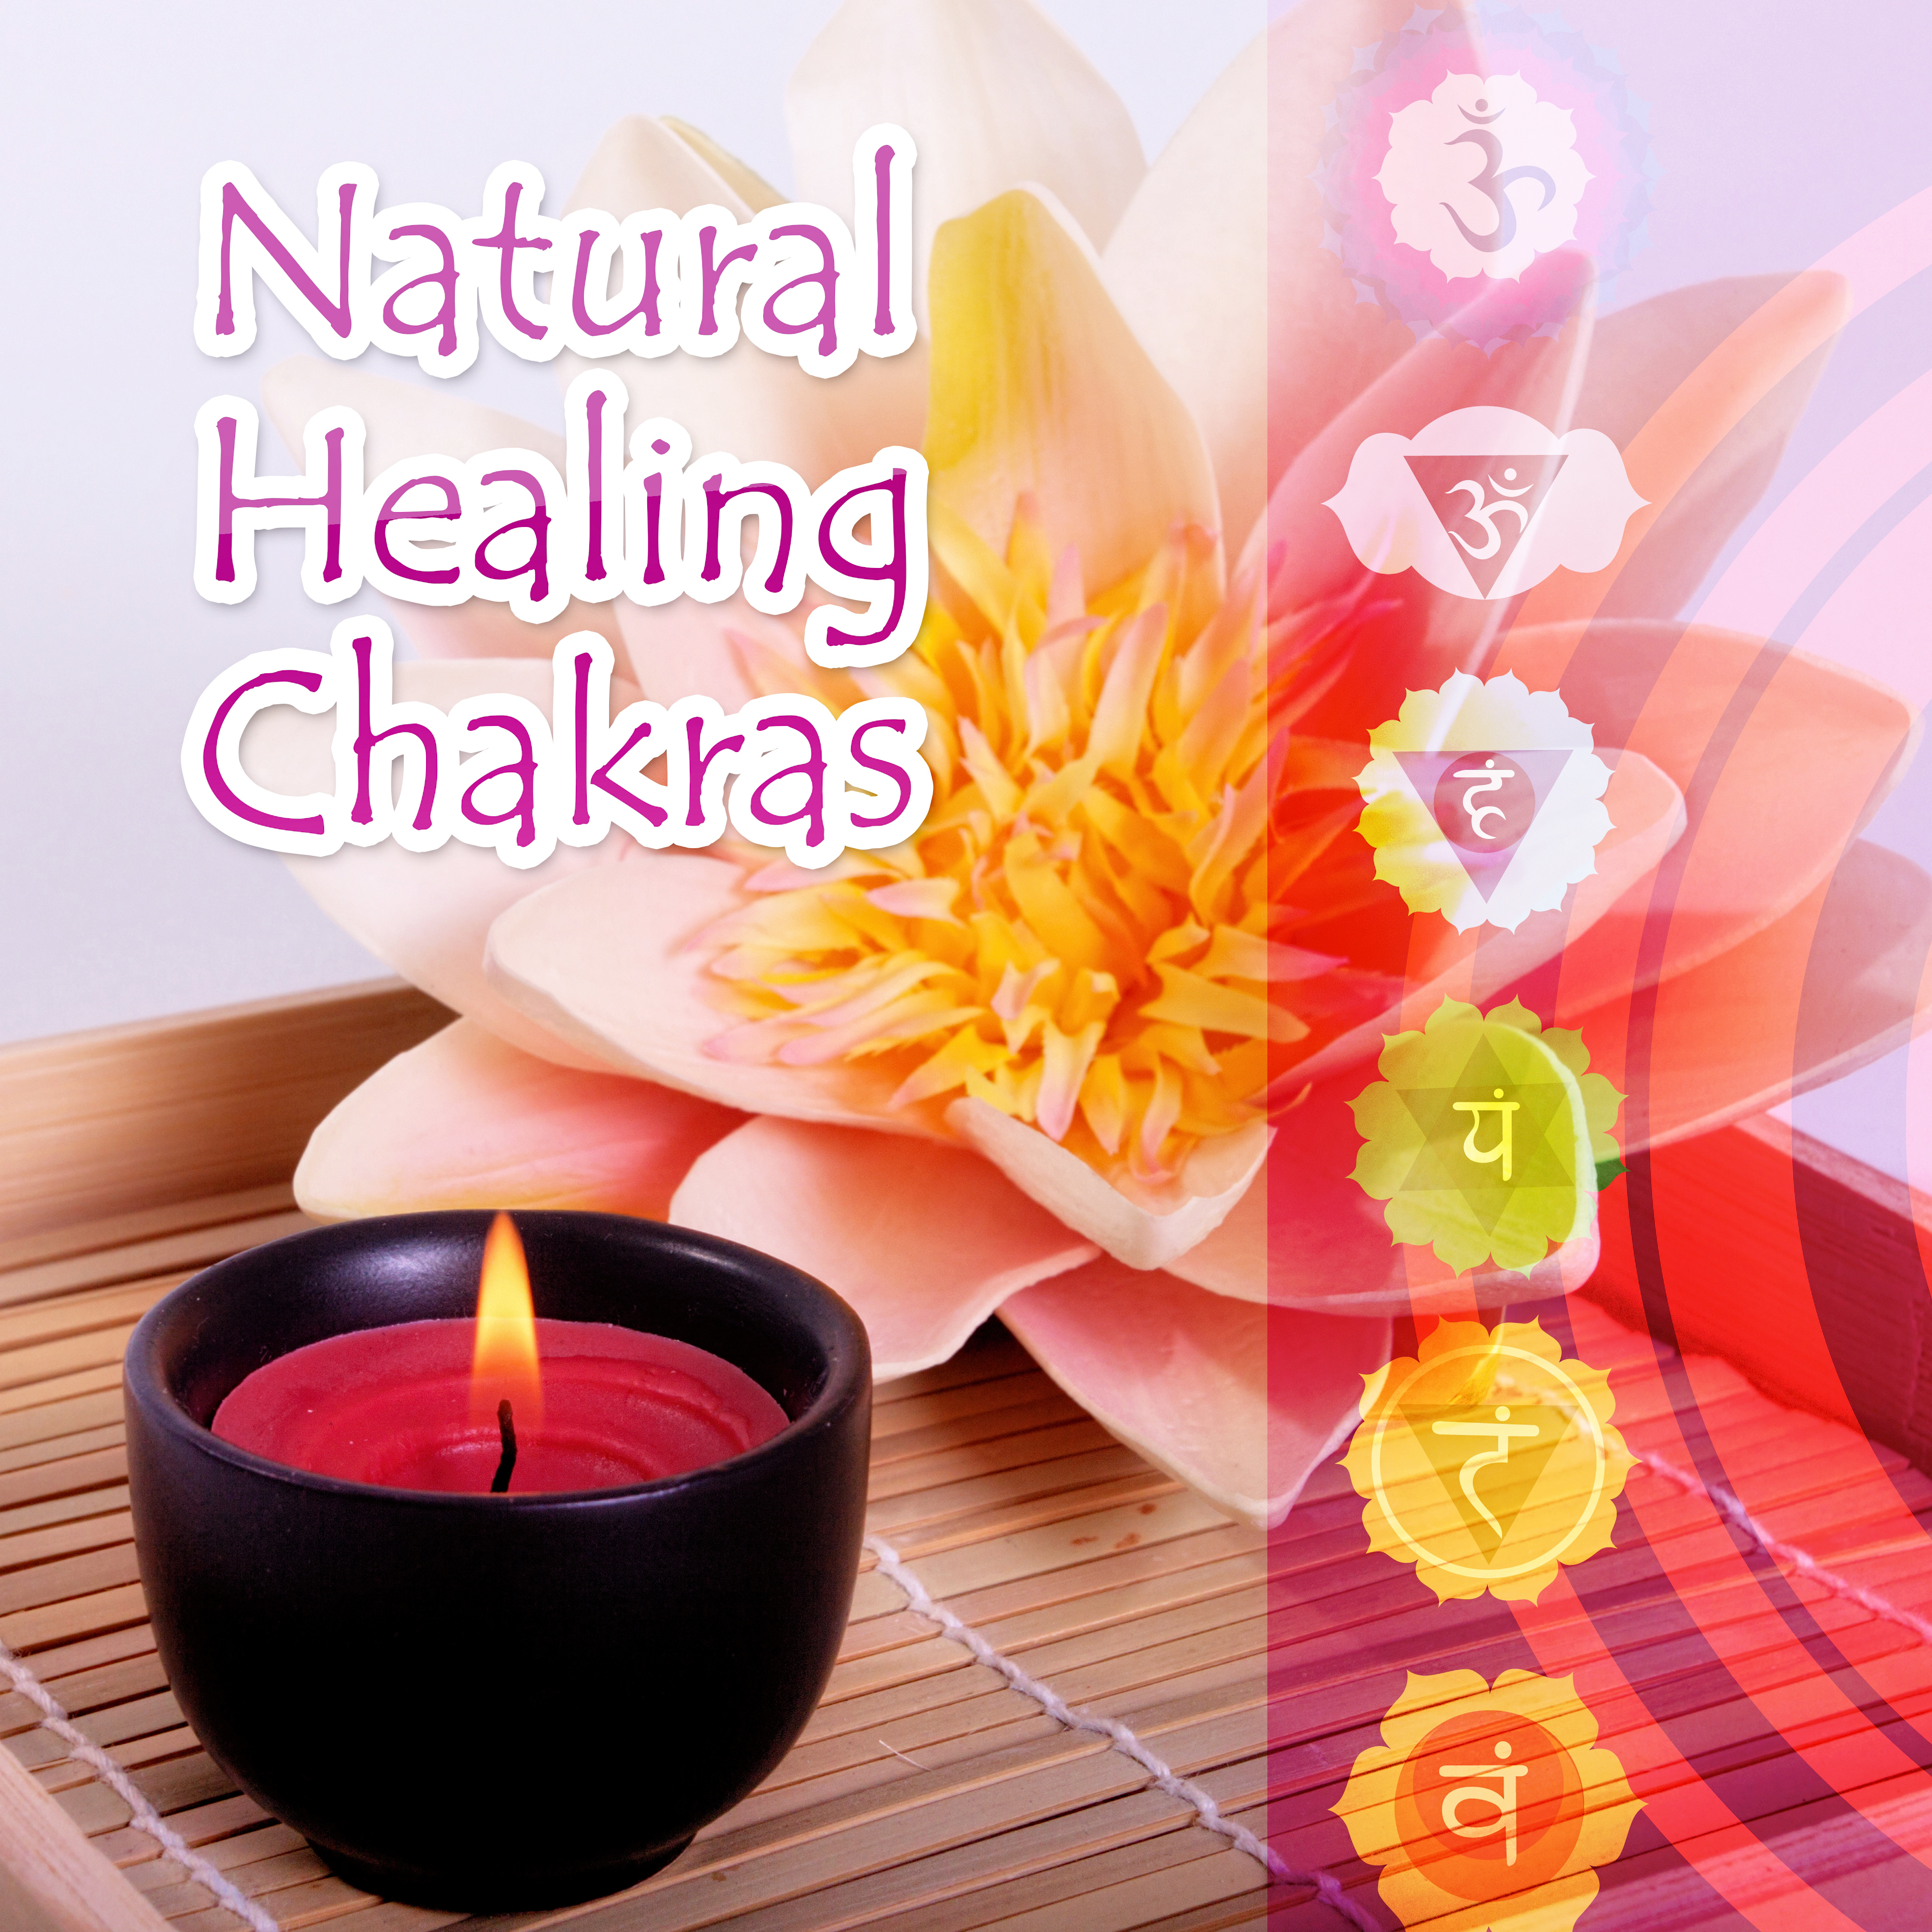 Natural Healing Chakras  Body Harmony, Inner Balance, Sound Therapy, Spiritual Healing, Water Energy, Flute Music, Perception, Breathe